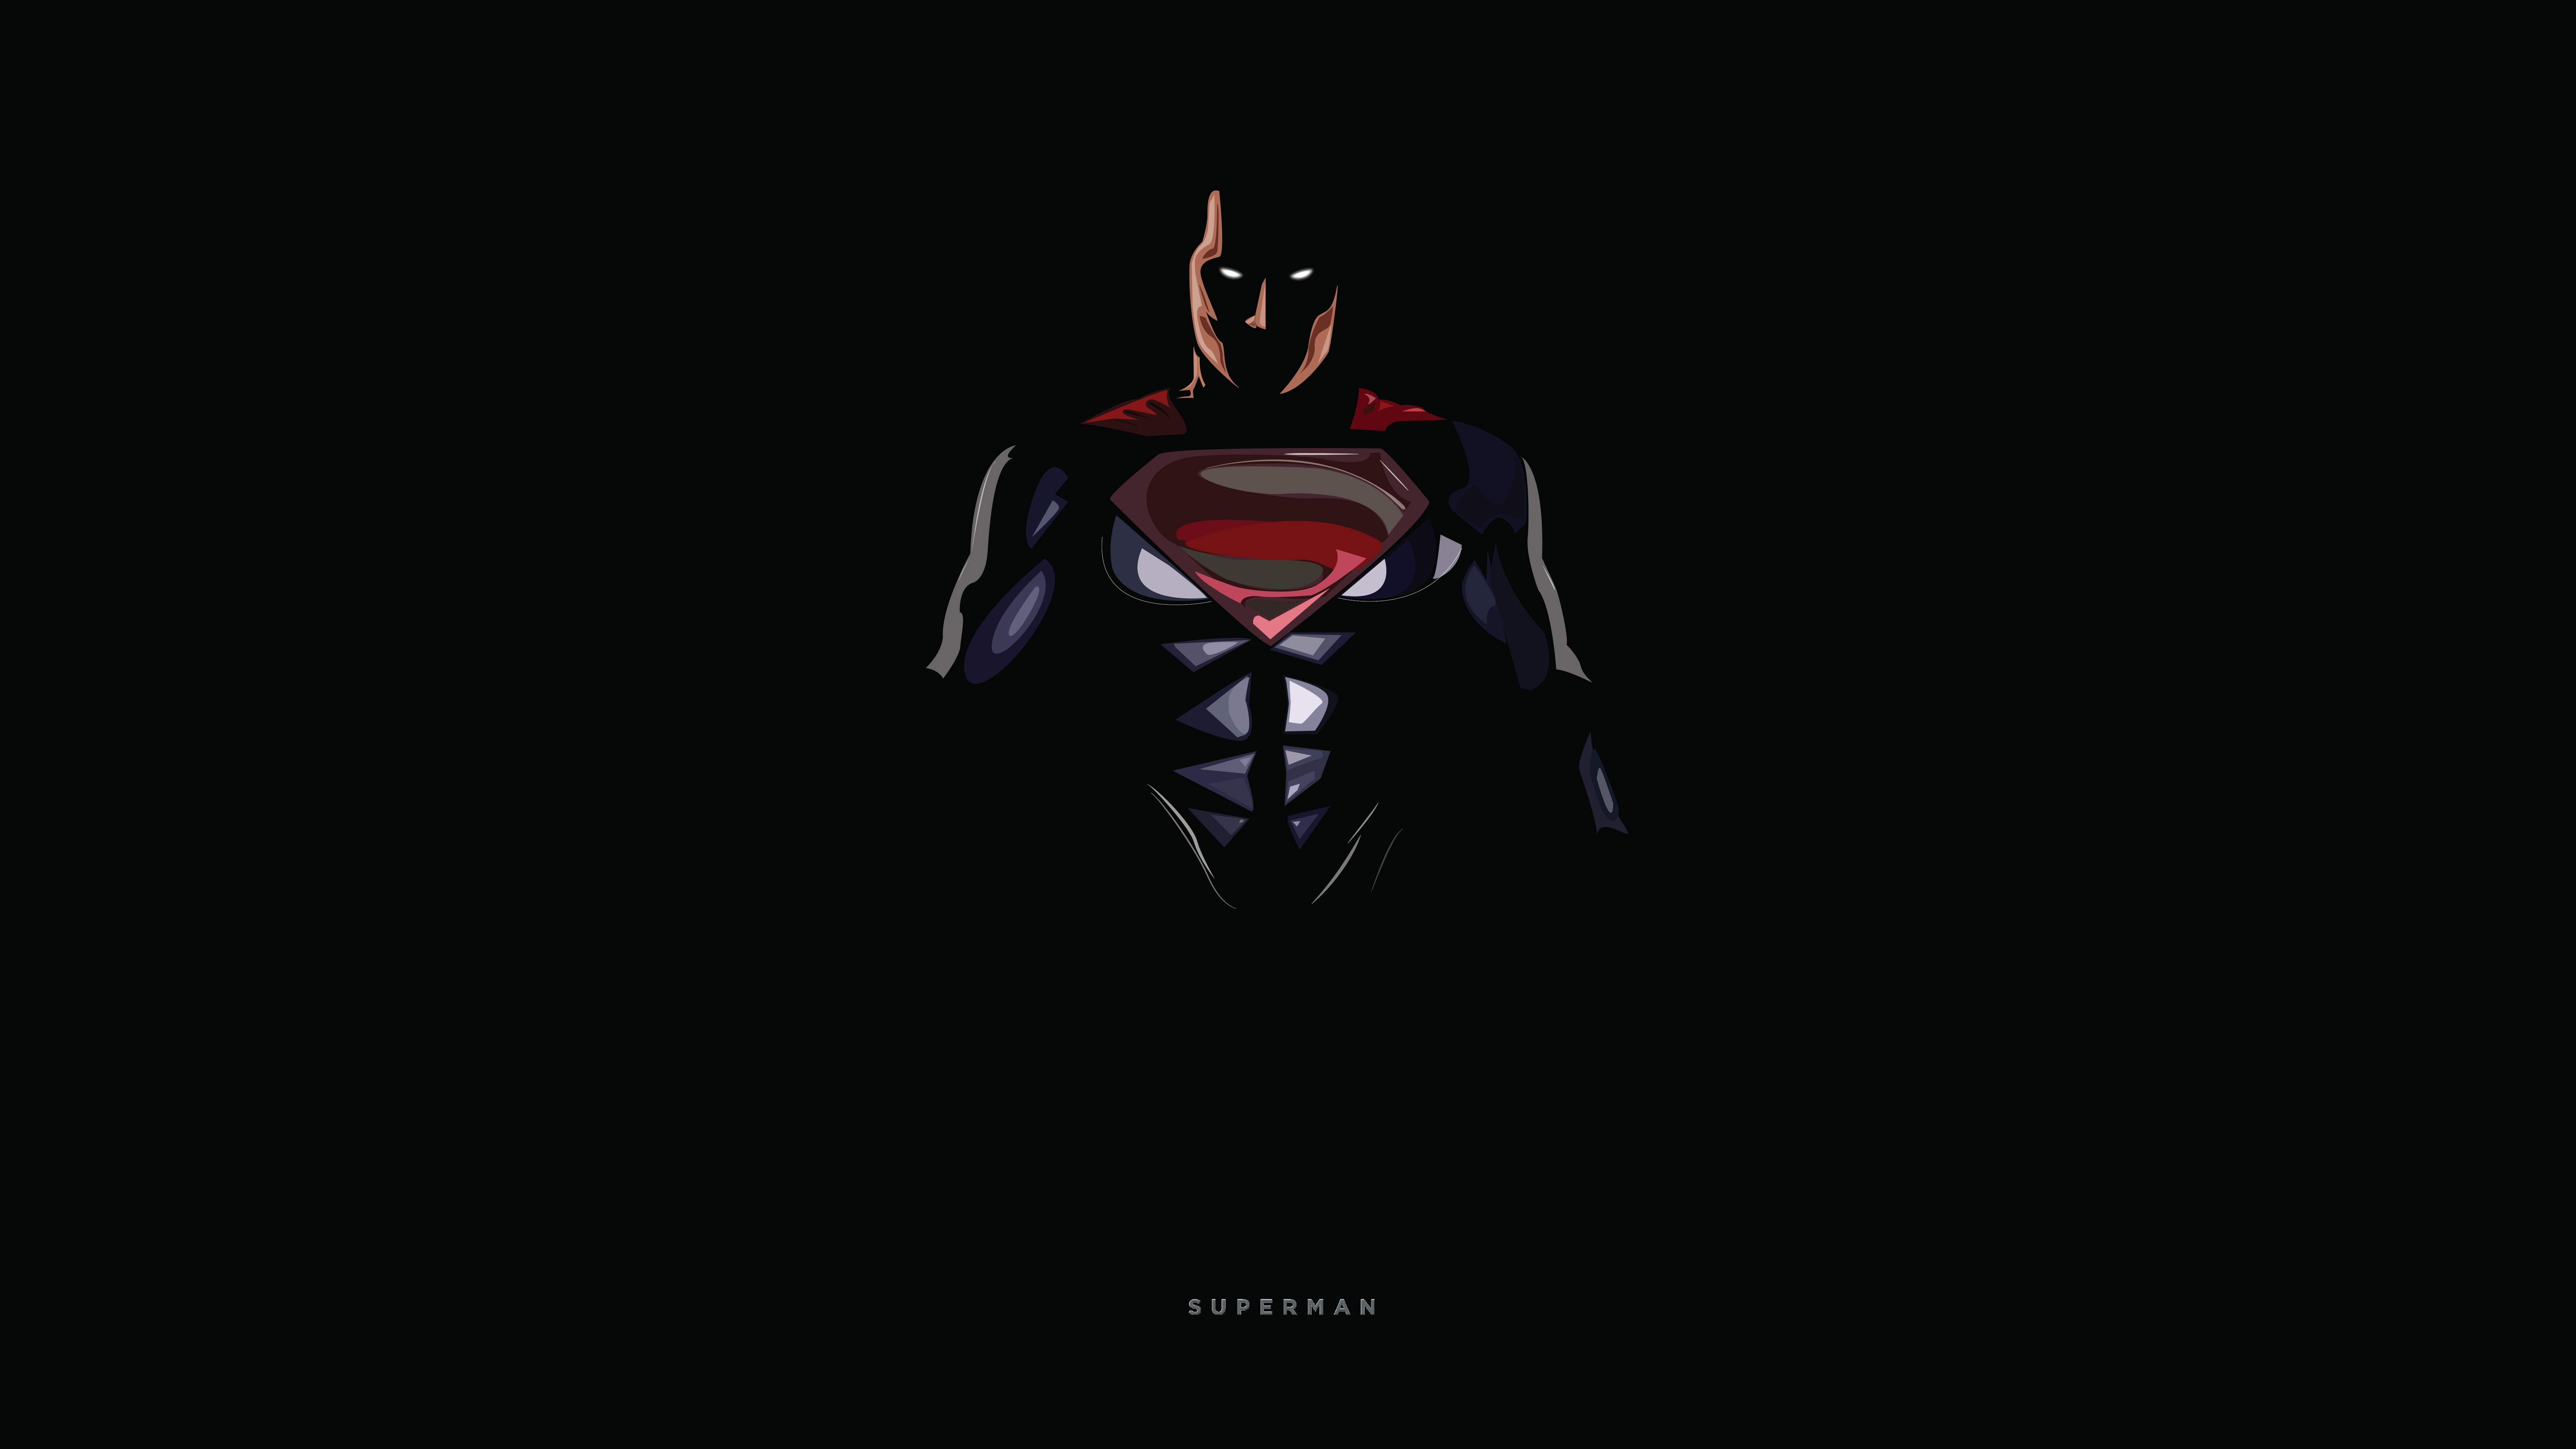 Superheroes, DC Comics, 8K, Dark background, Minimal, Superman